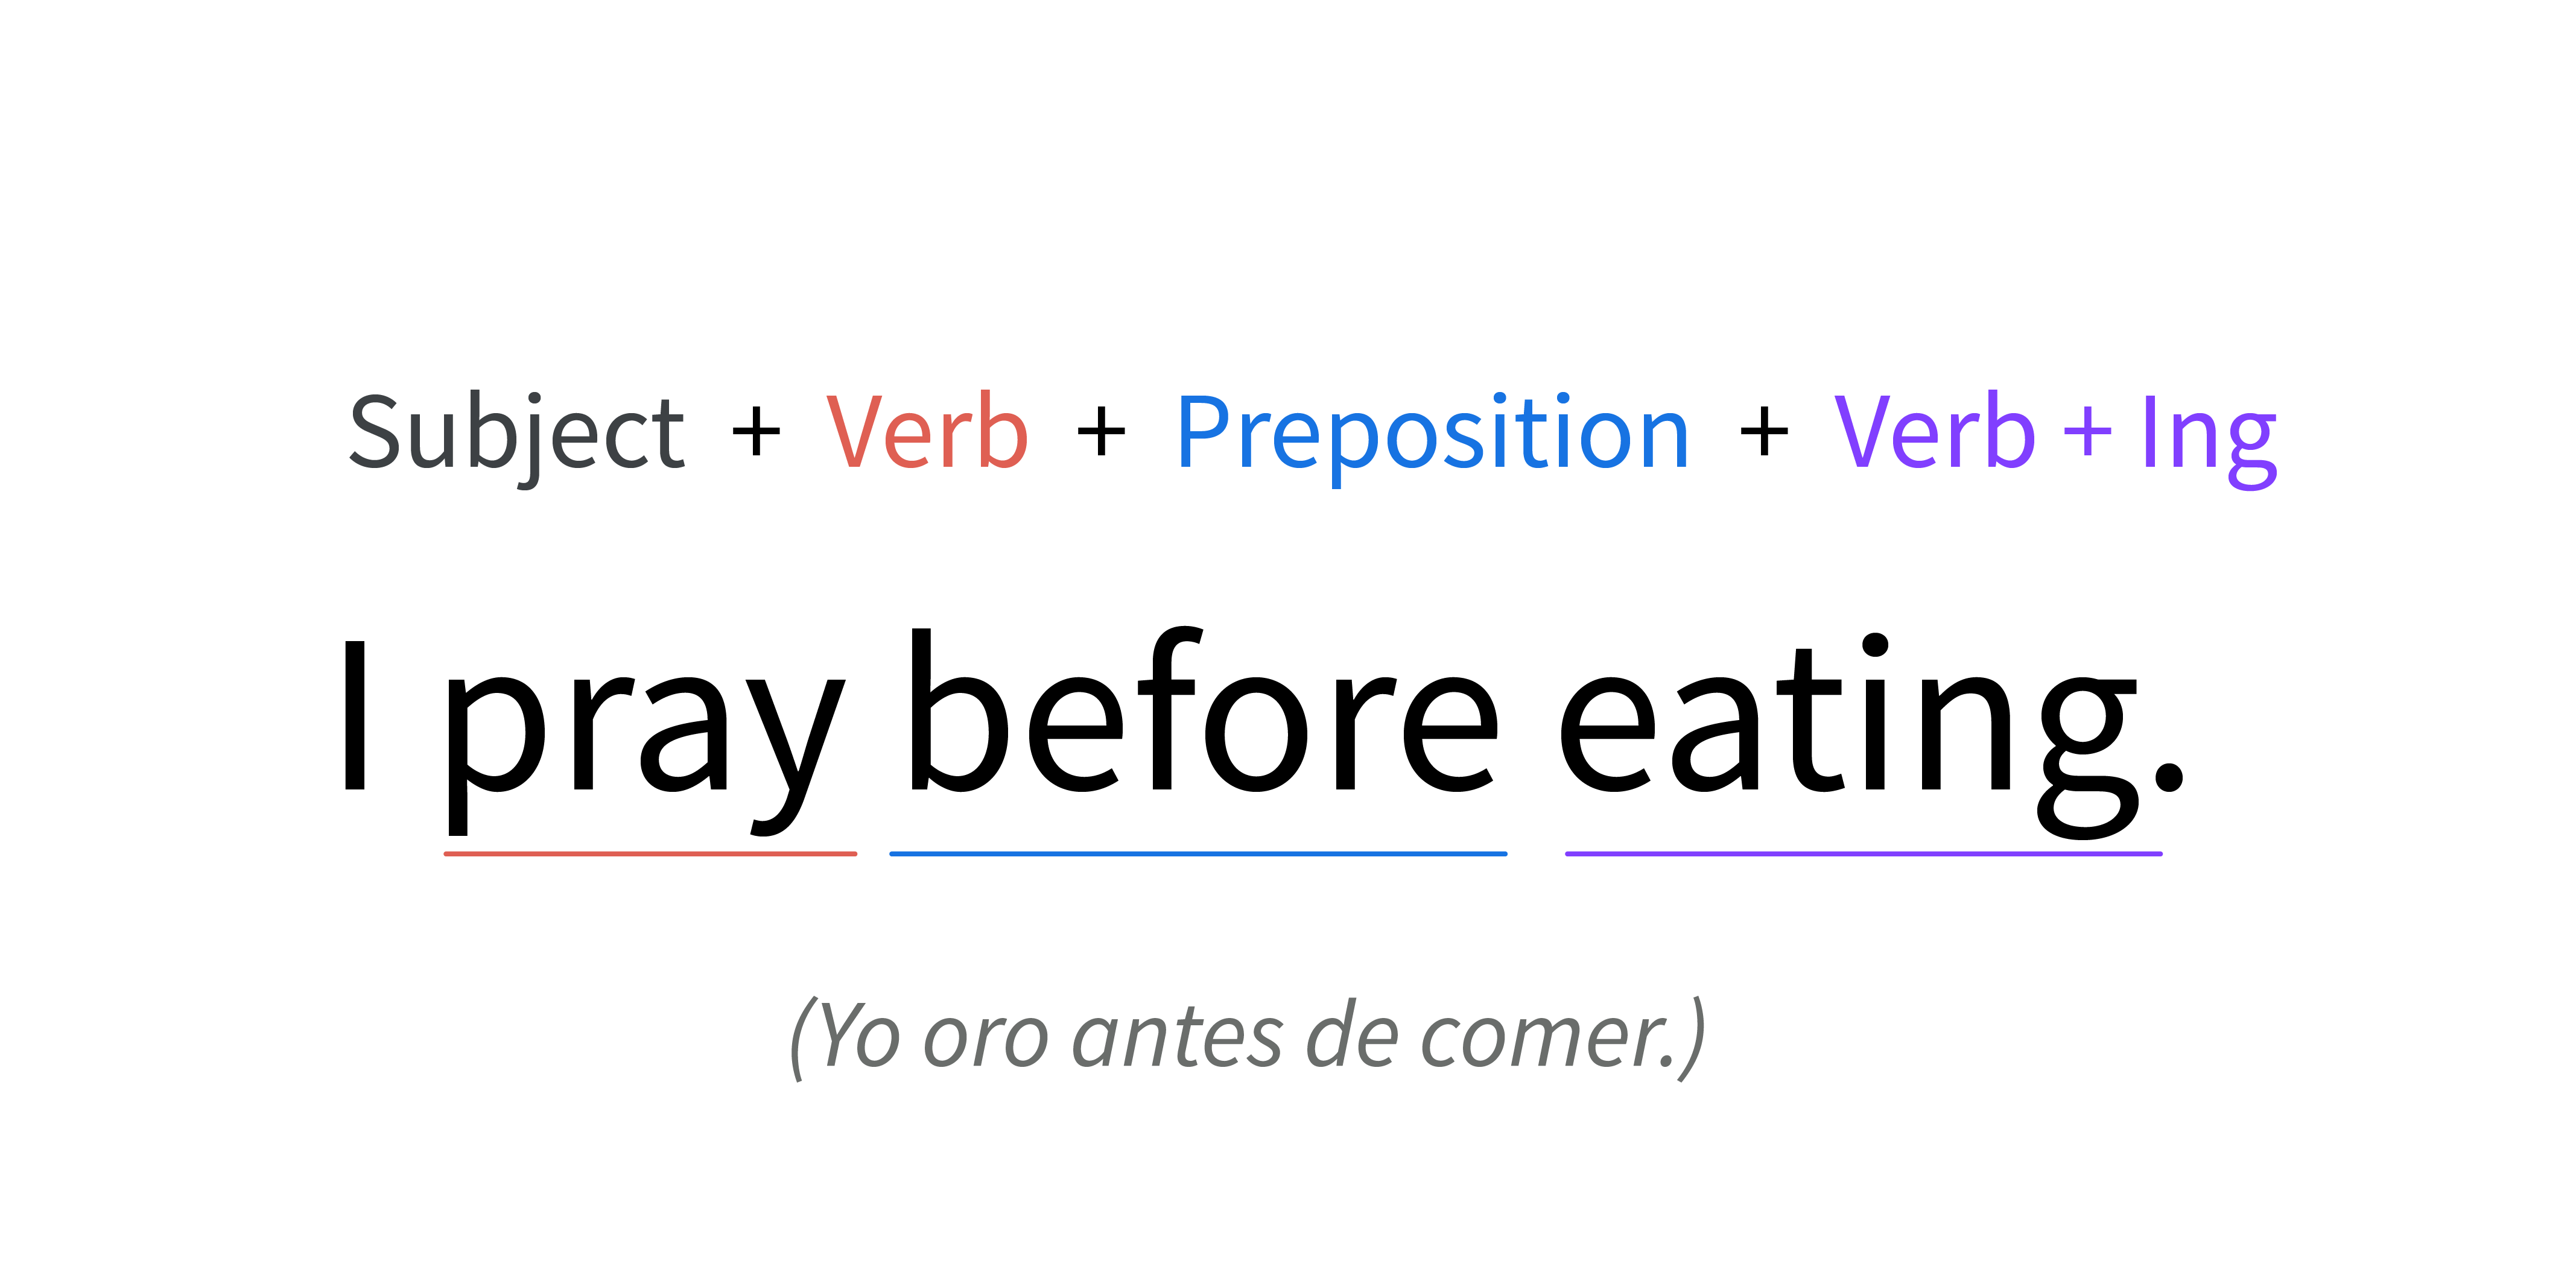 Imagen ejemplo de Verb + Preposition + Gerund.